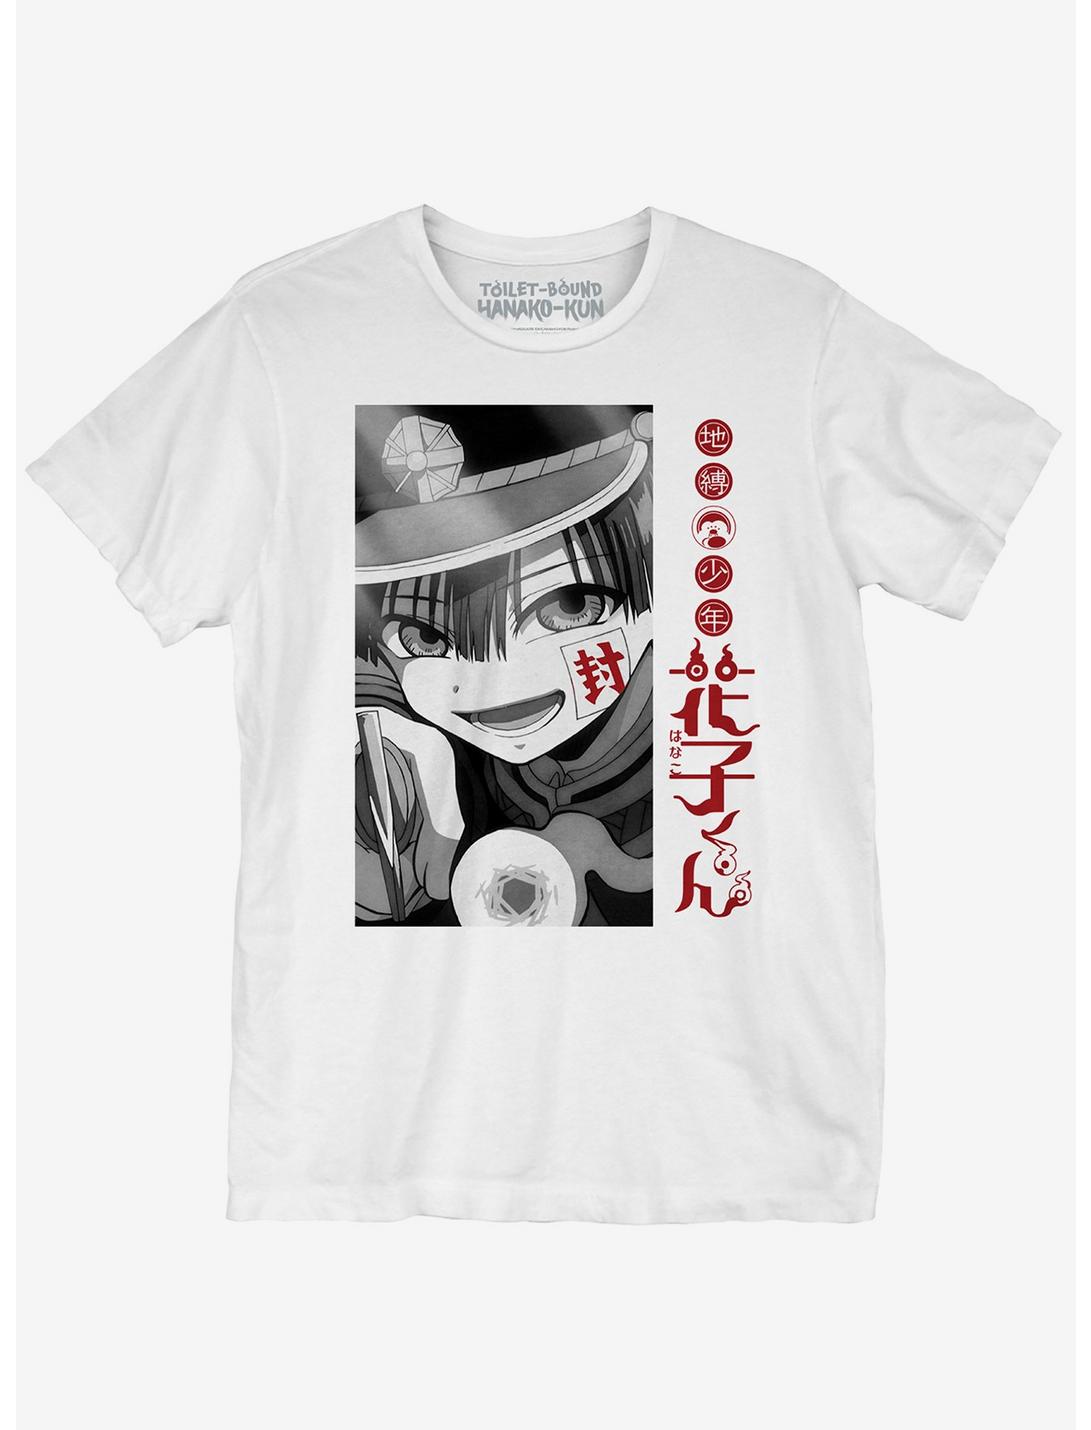 Toilet-Bound Hanako-Kun Box Girls T-Shirt, MULTI, hi-res